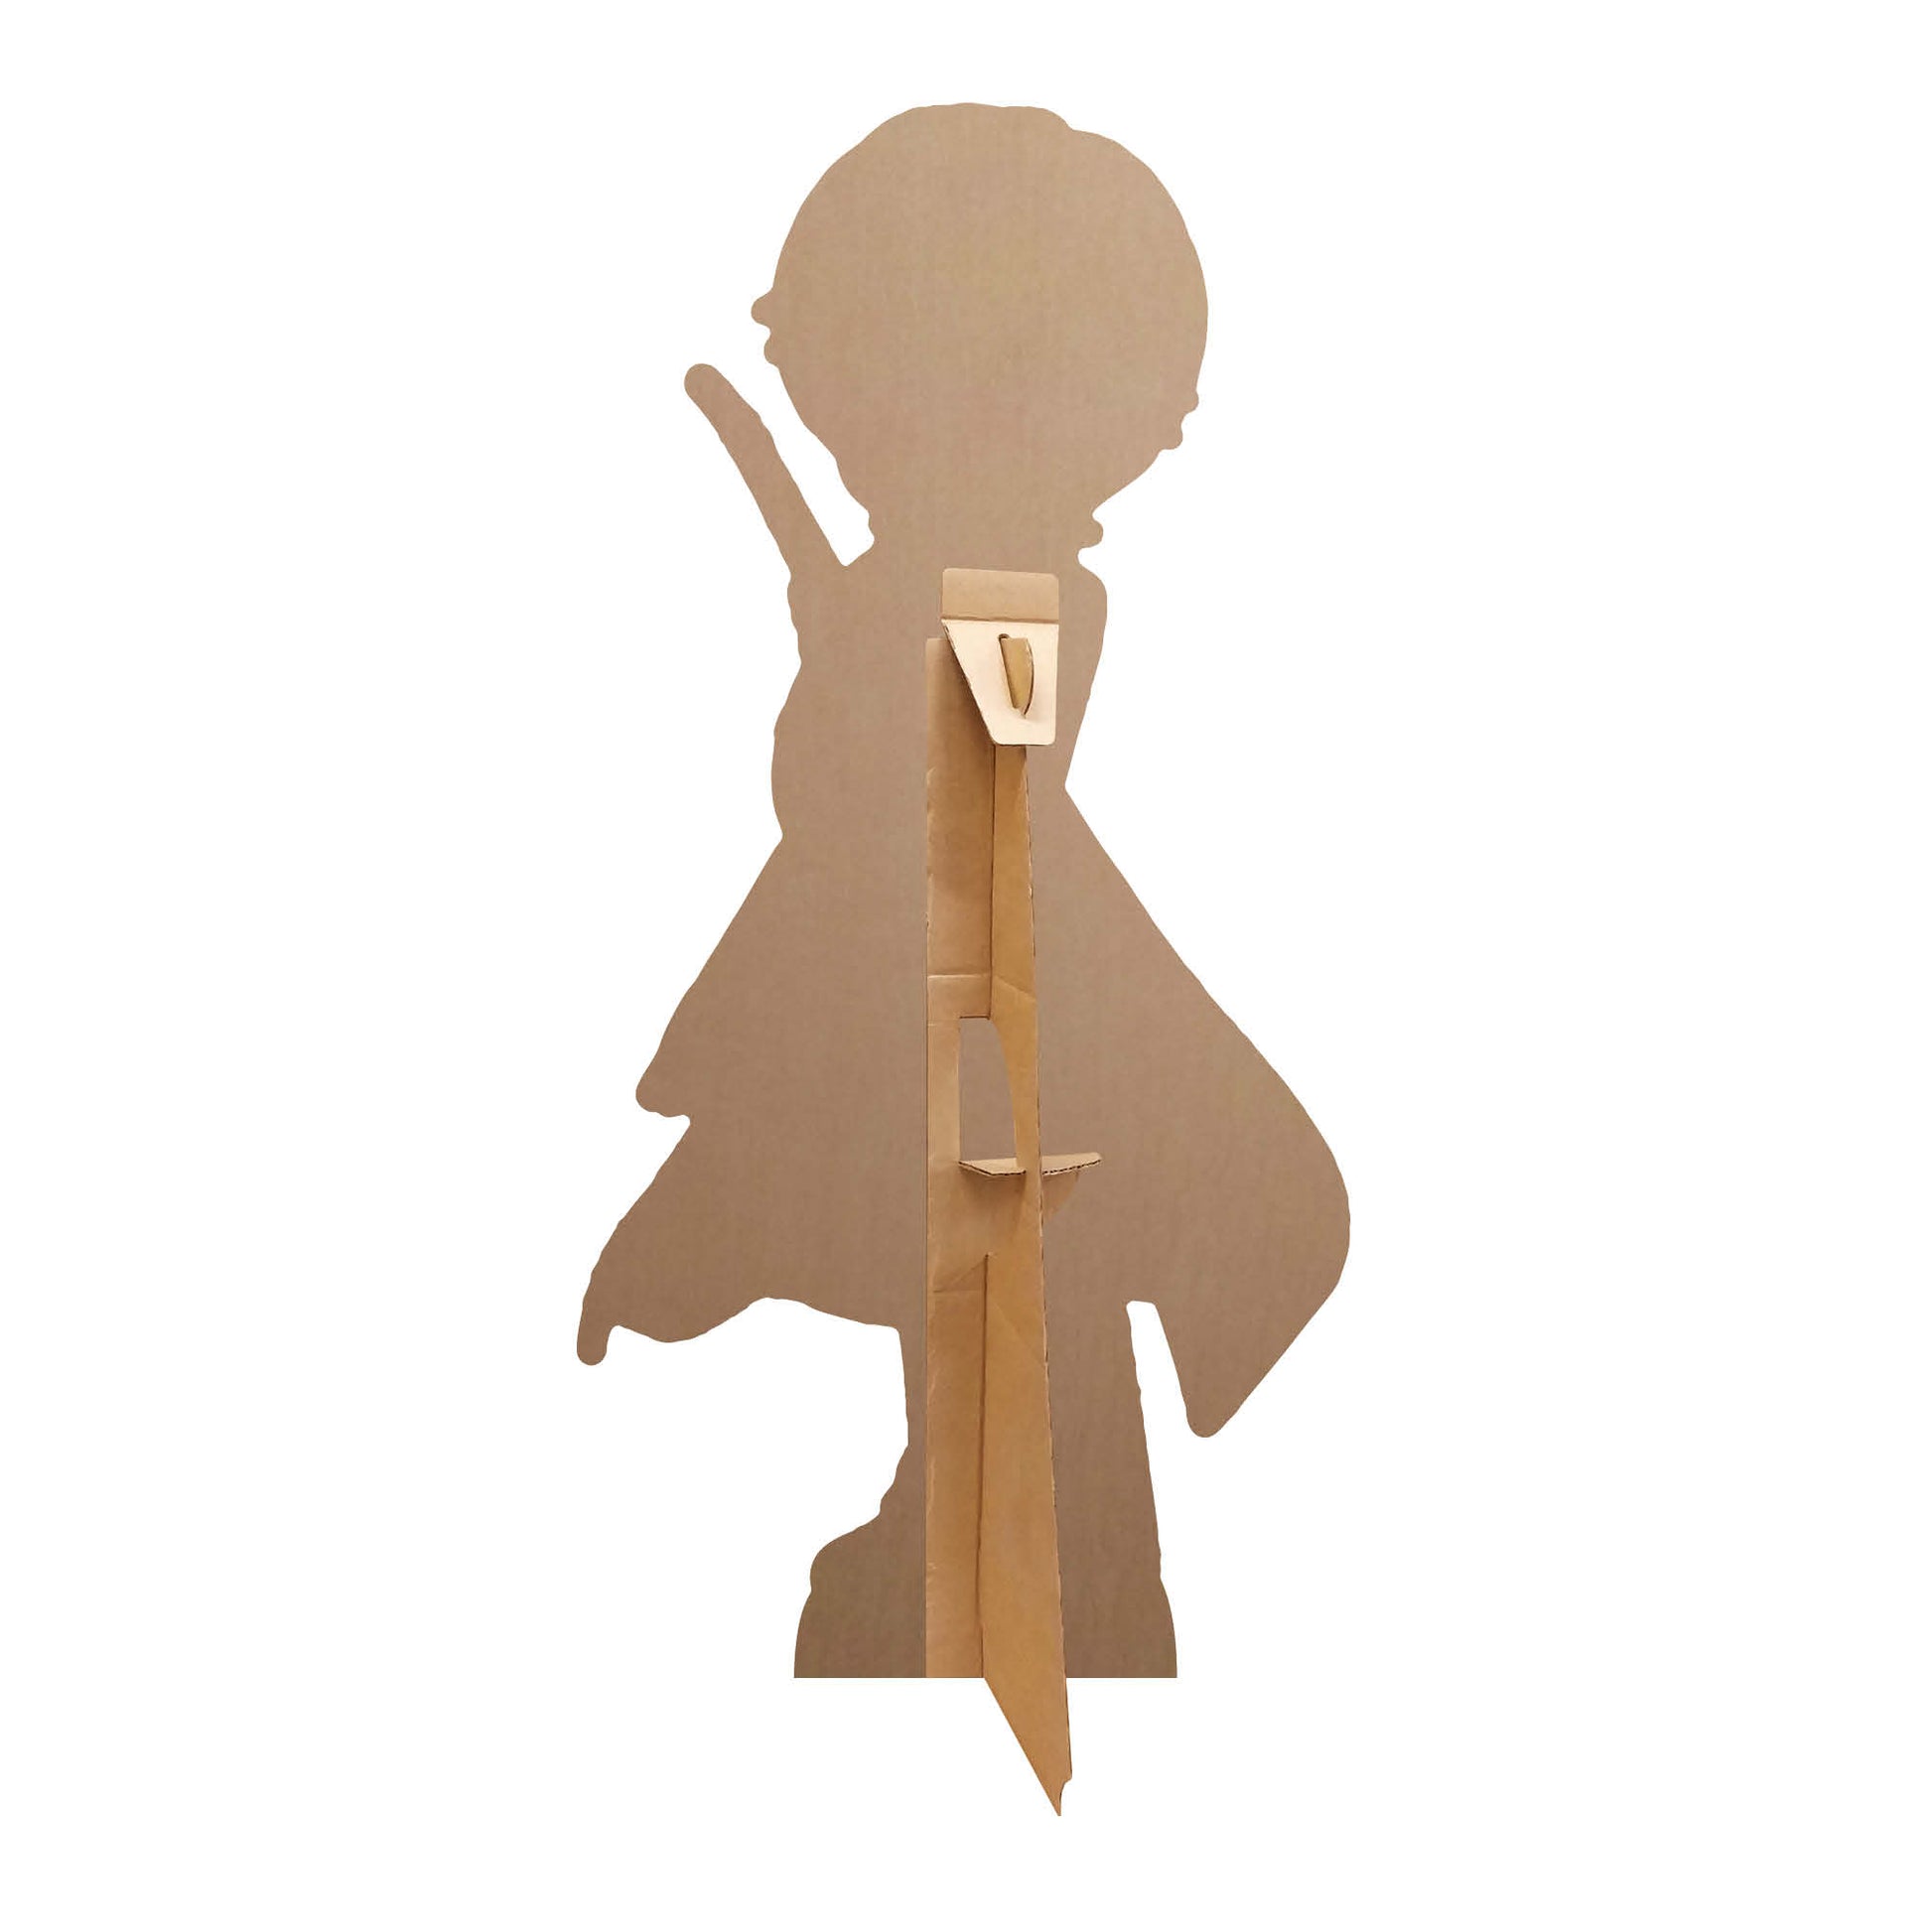 Ron Weasley holding wand Mini Cardboard Cutout / Standup